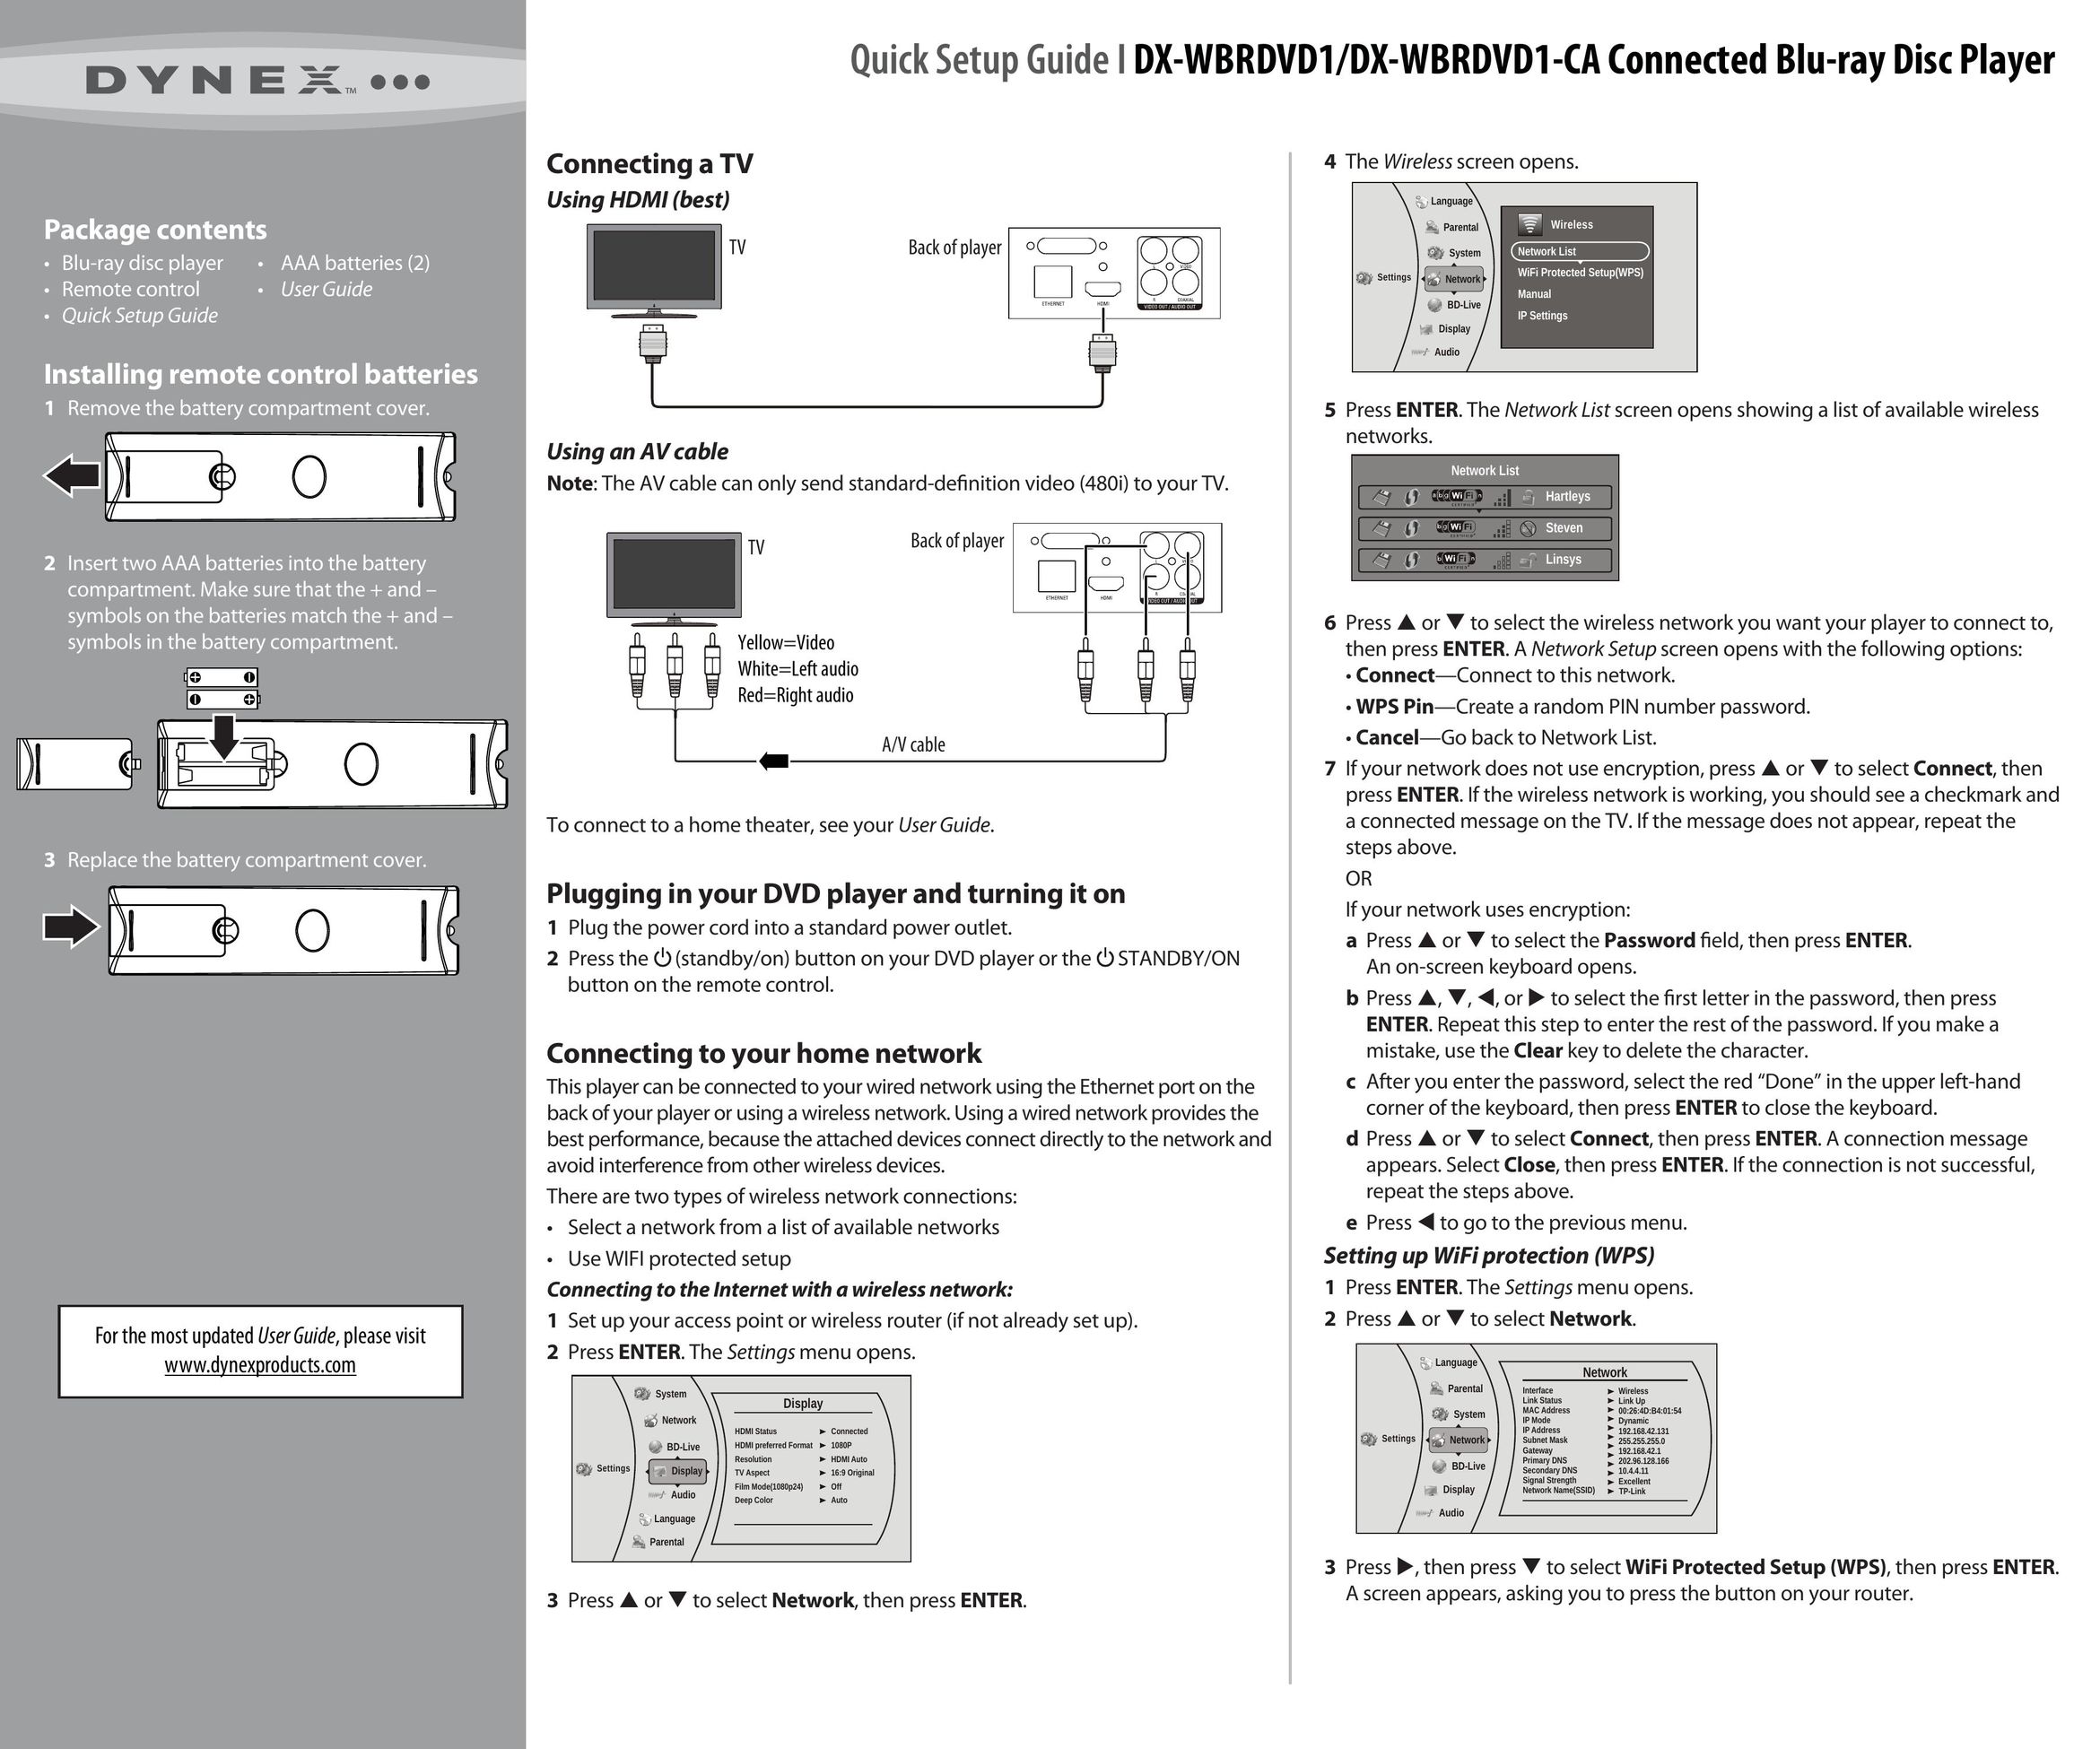 Dynex DX-WBRDVD1-CA Blu-ray Player User Manual (Page 1)